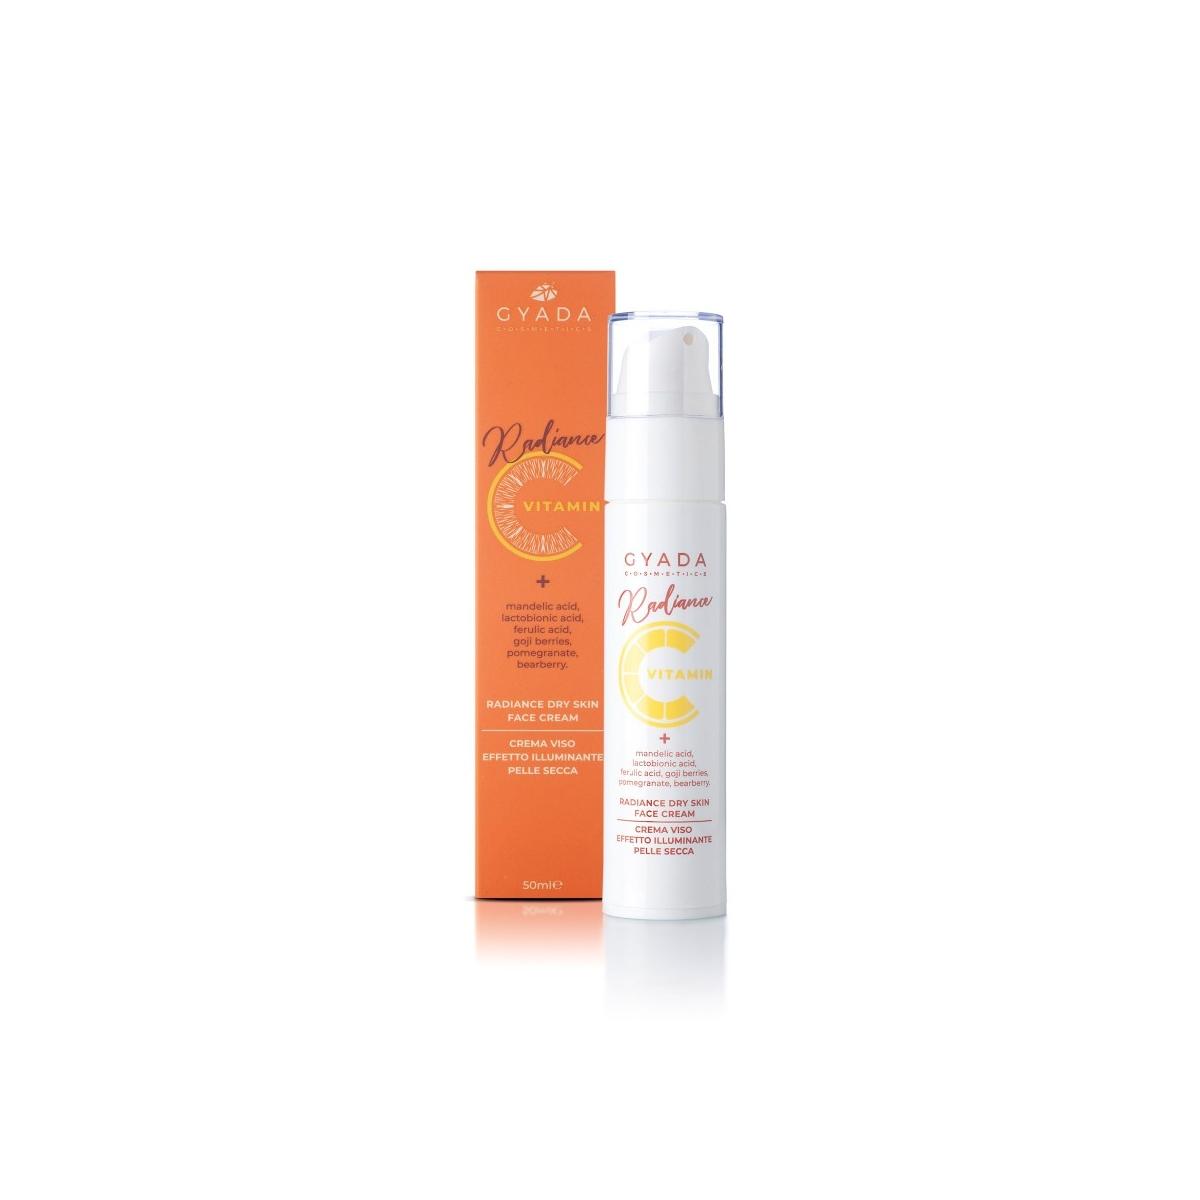 Gyada Cosmetics Radiance Vitamin C Dry Skin Face Cream - Crema Viso Illuminante Pelli secche 50 ml